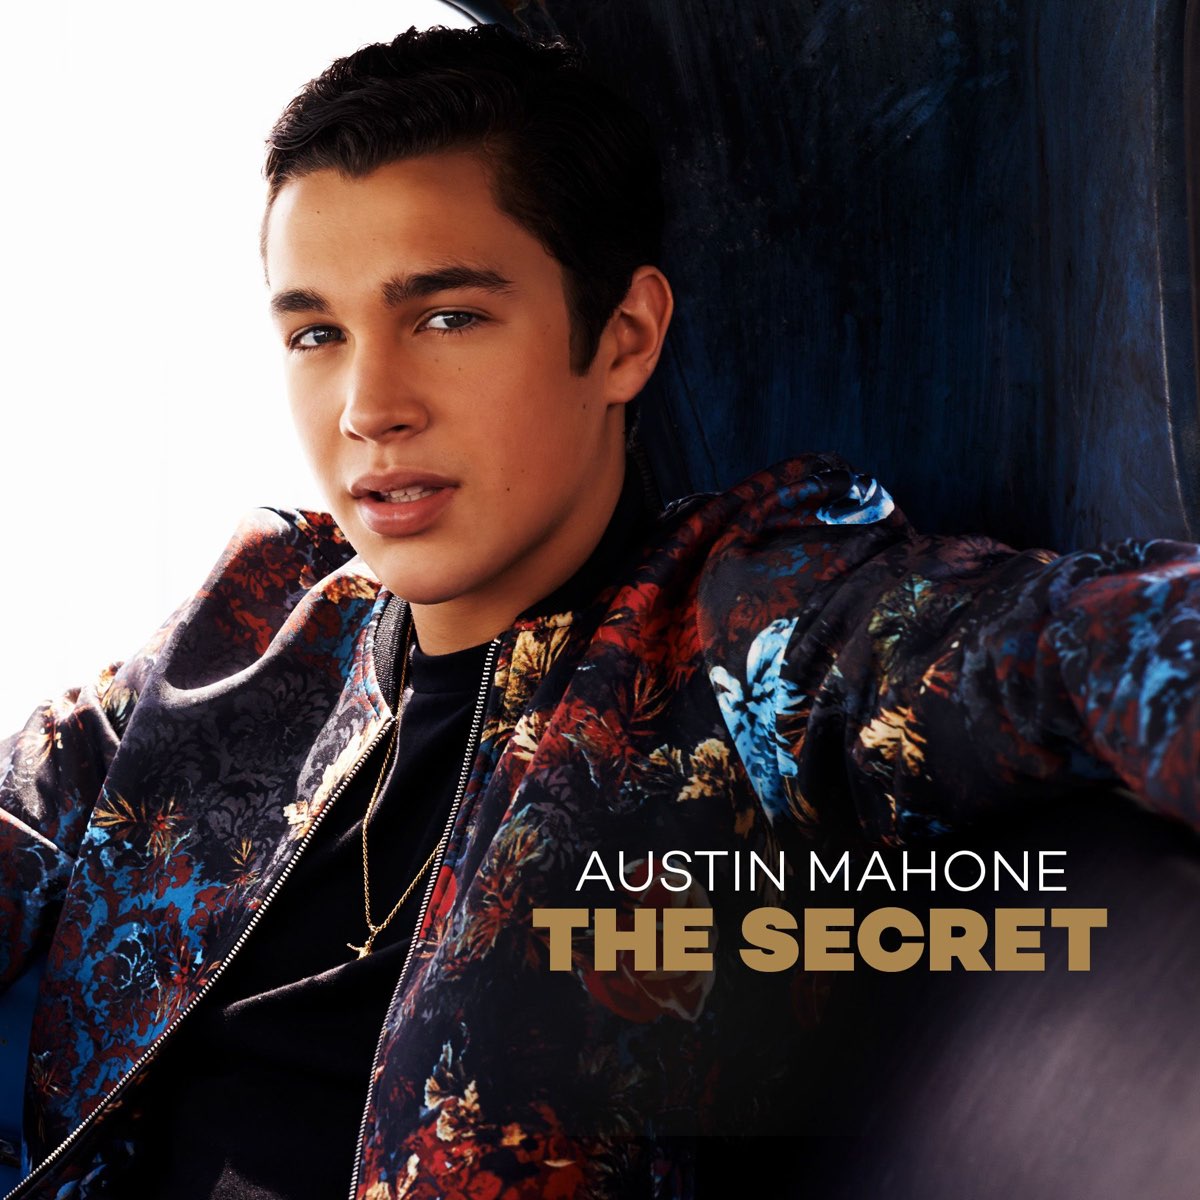 The Secret by Austin Mahone on Apple Music